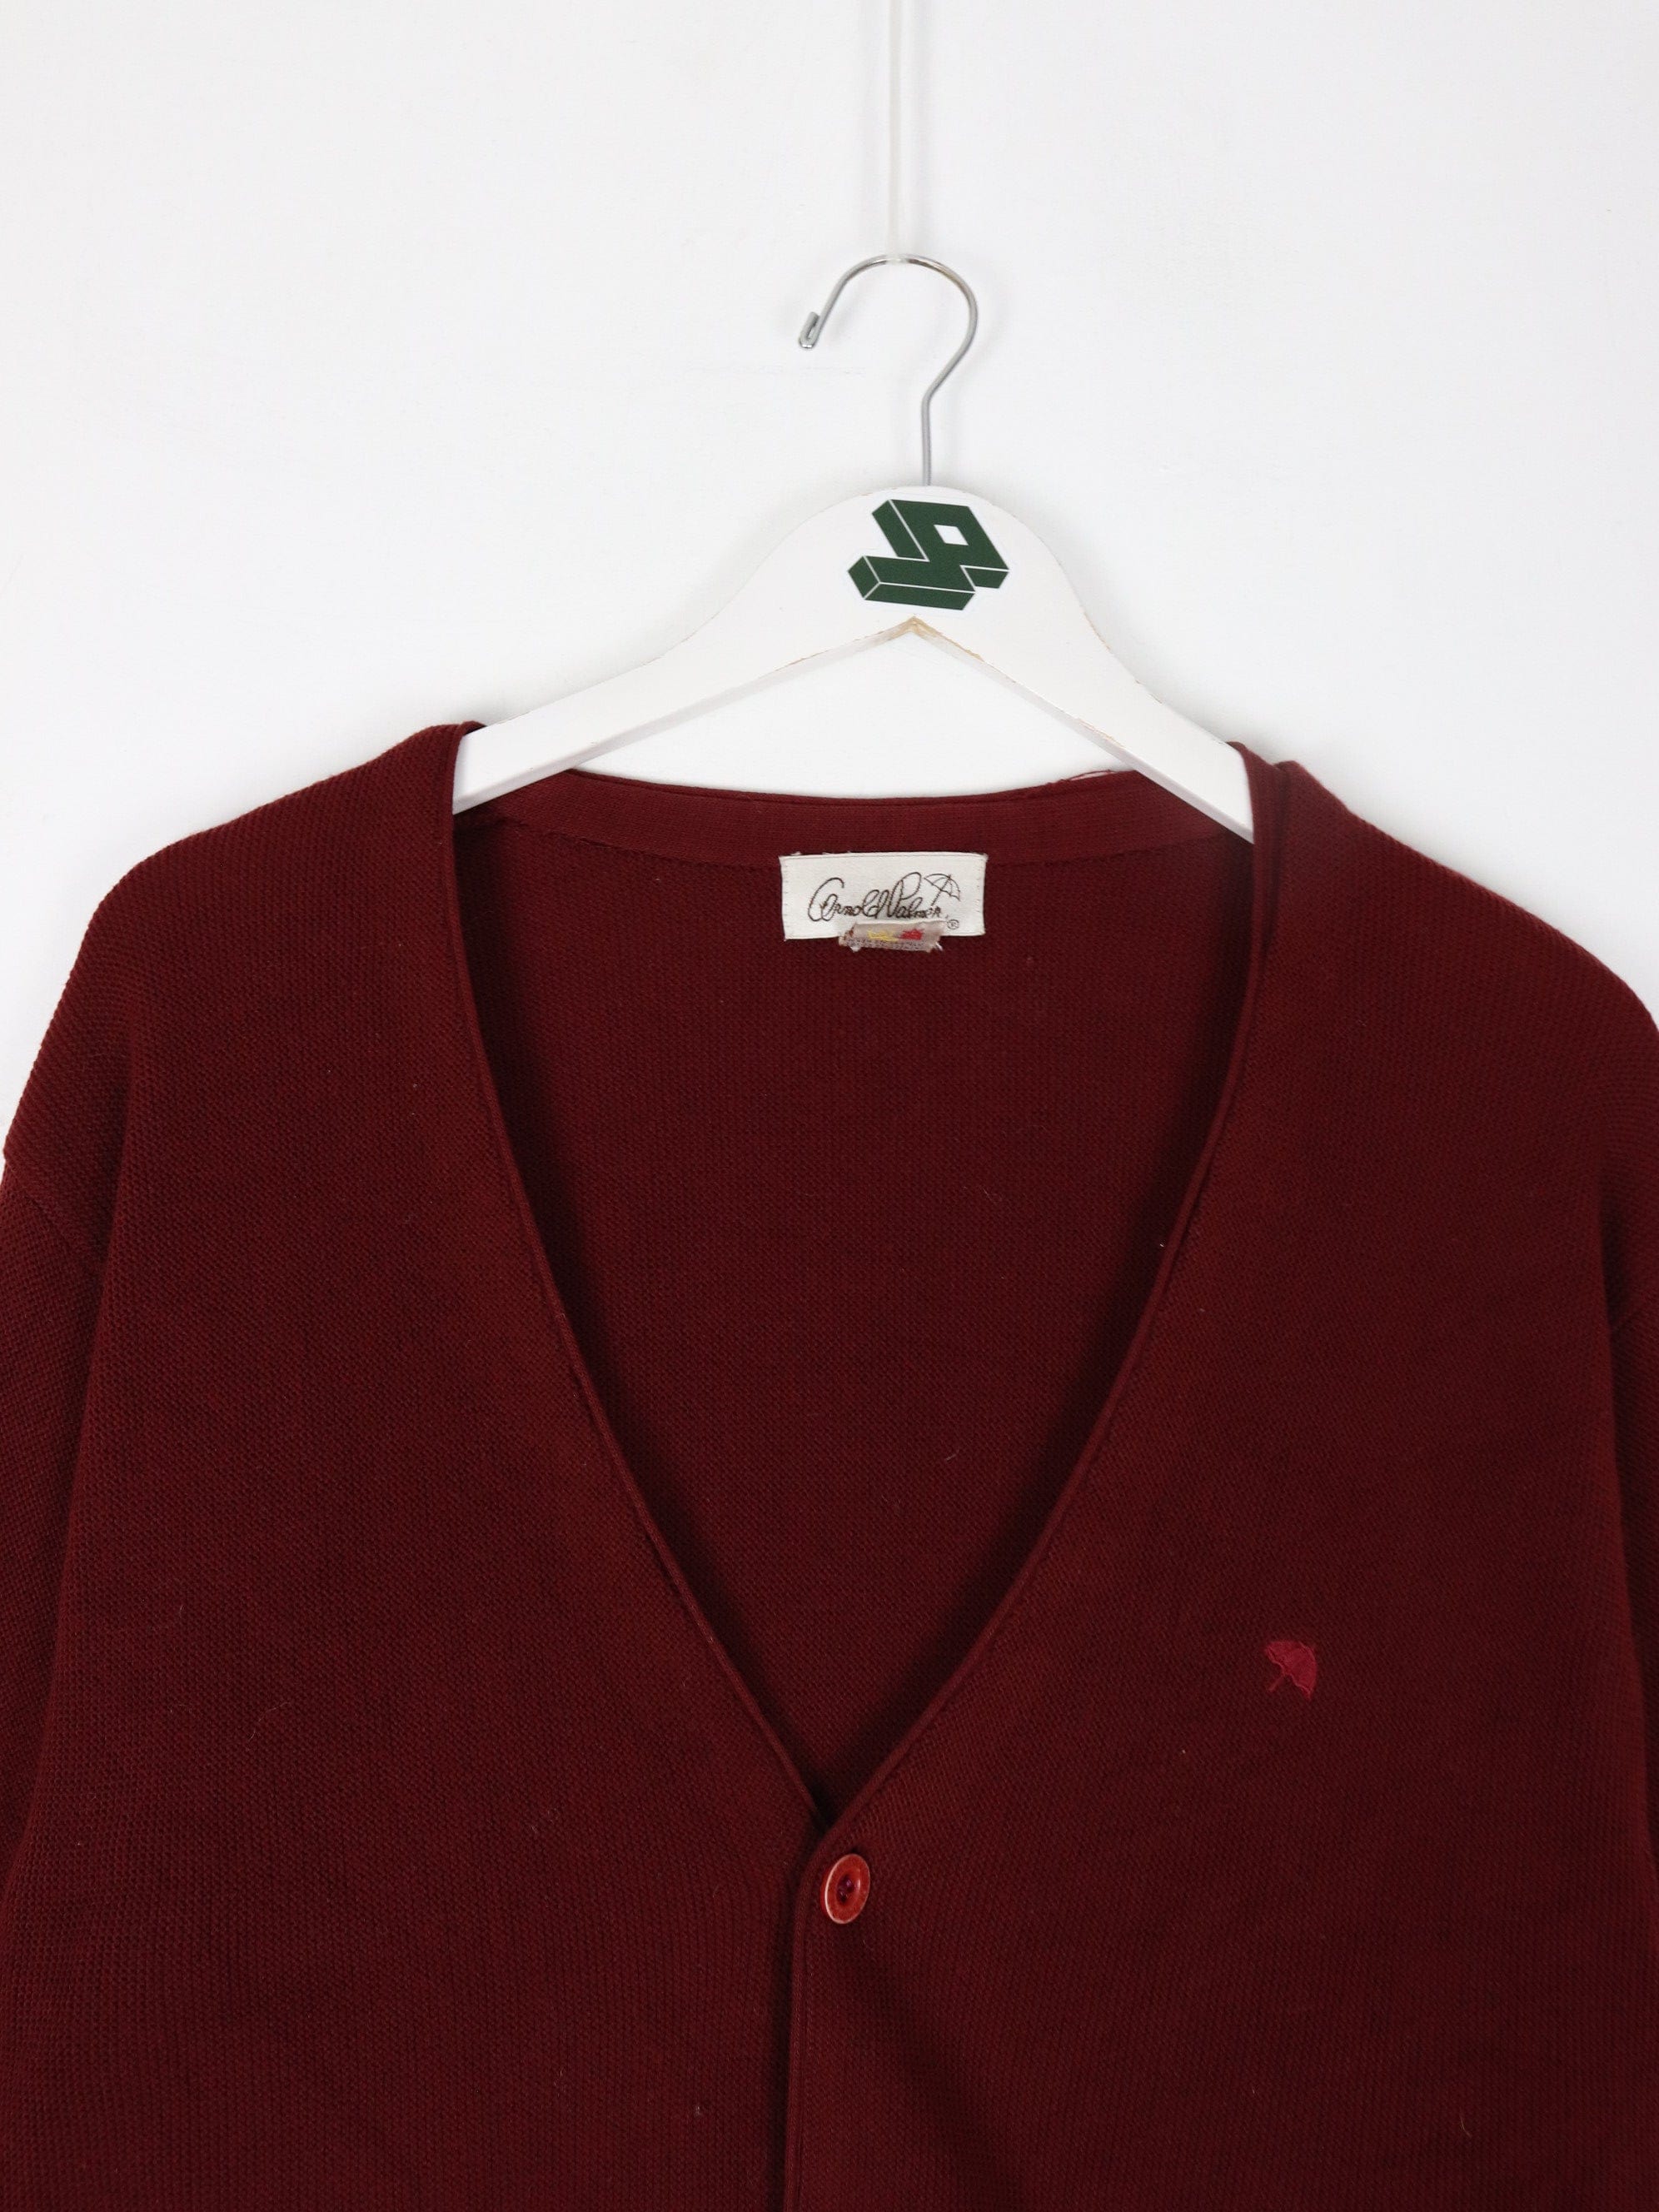 Vintage Arnold Palmer Sweater Mens Large Red Knit Cardigan